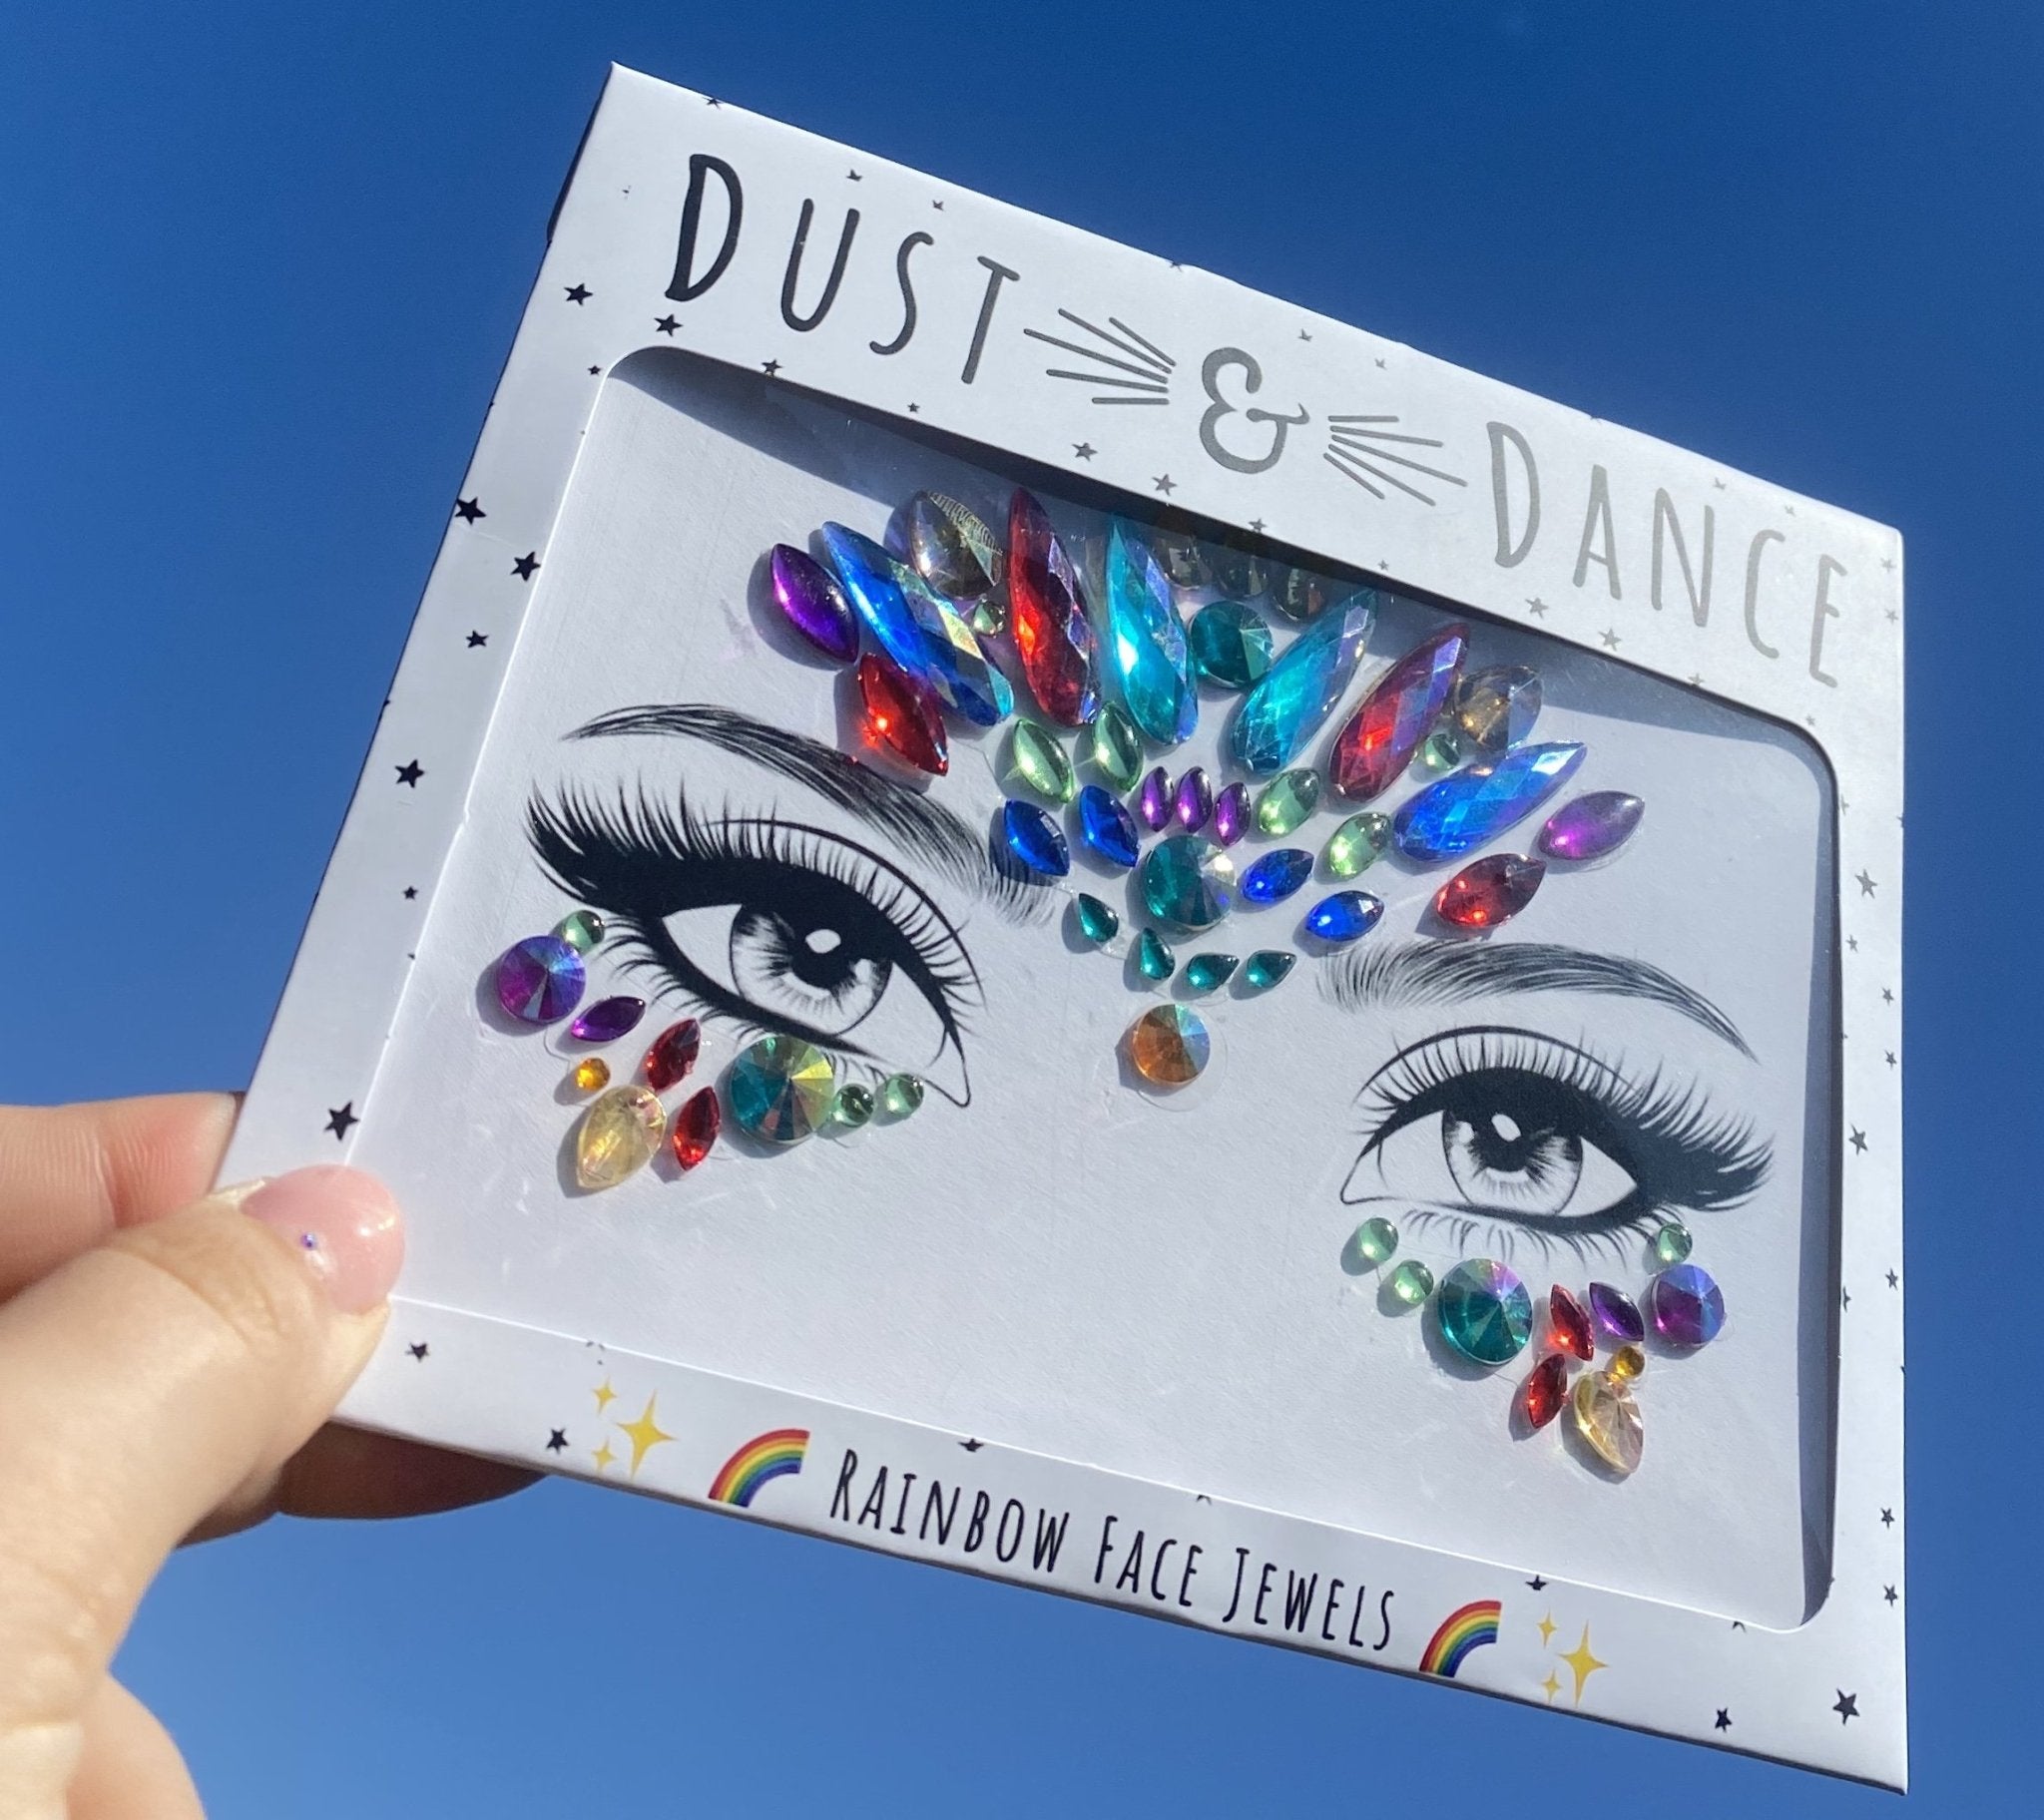 NEW! Rainbow Face Jewels 🌈 - Dust & Dance